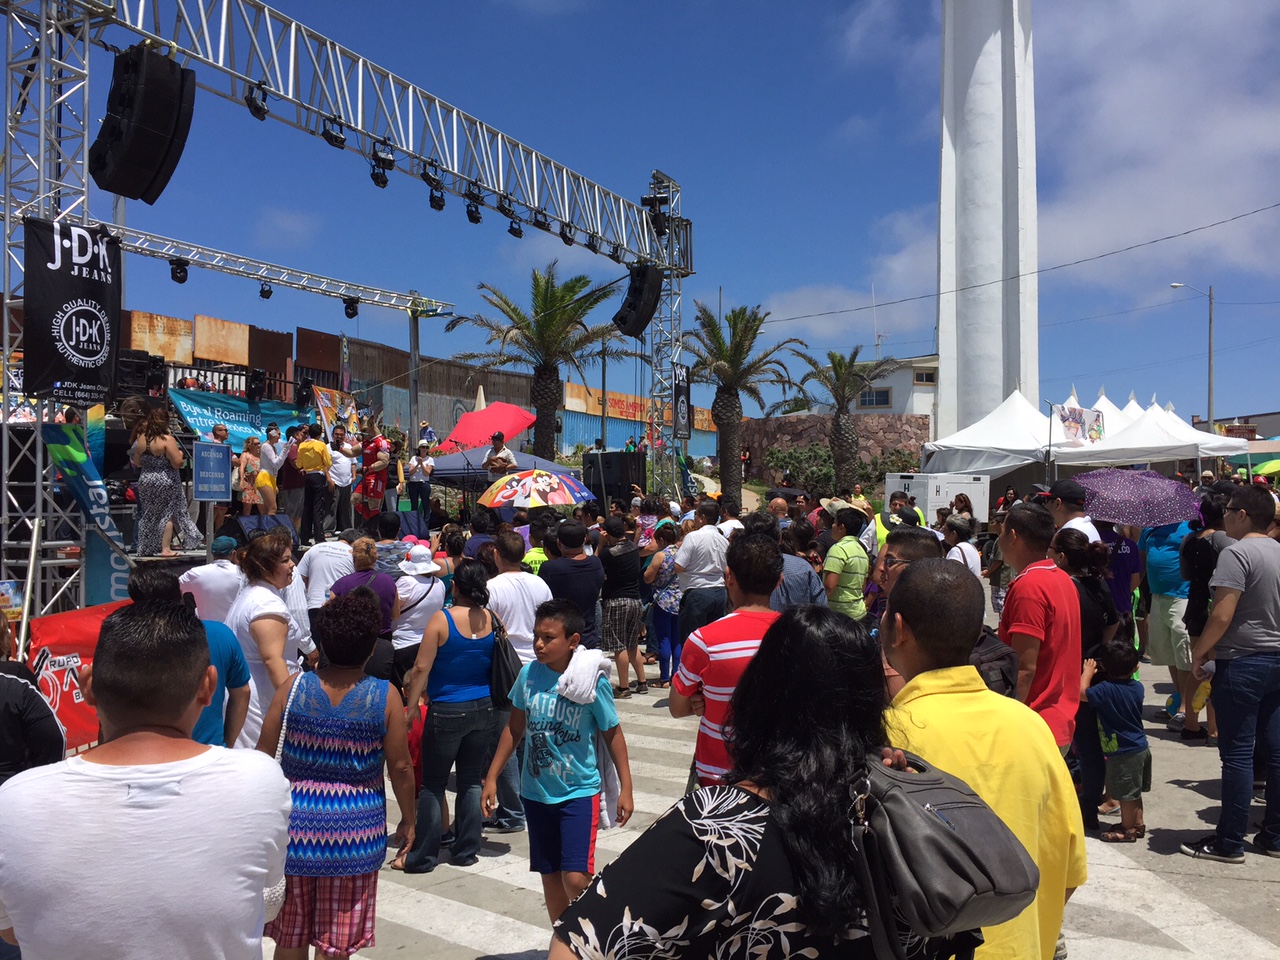 Asisten 30 mil personas al evento “Tijuana en la playa 2015”